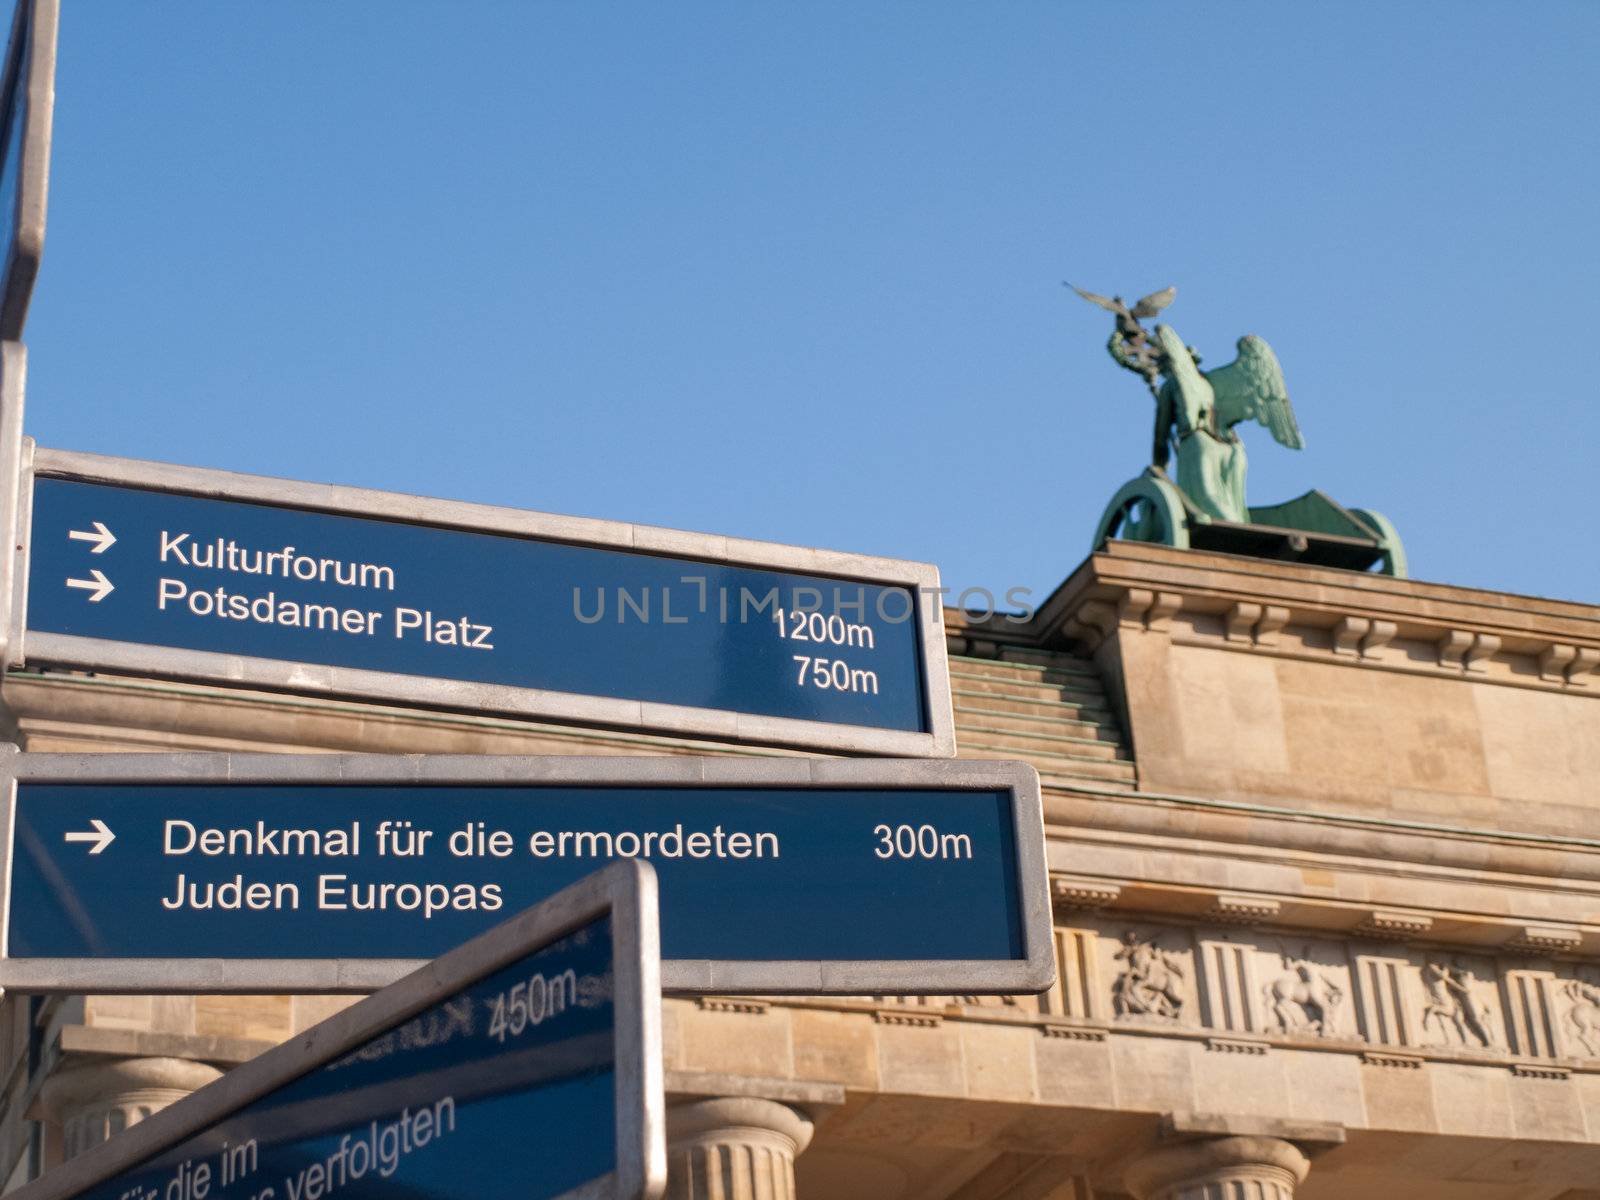 Direction Sign by Brandenburg Gate in Berlin Germany